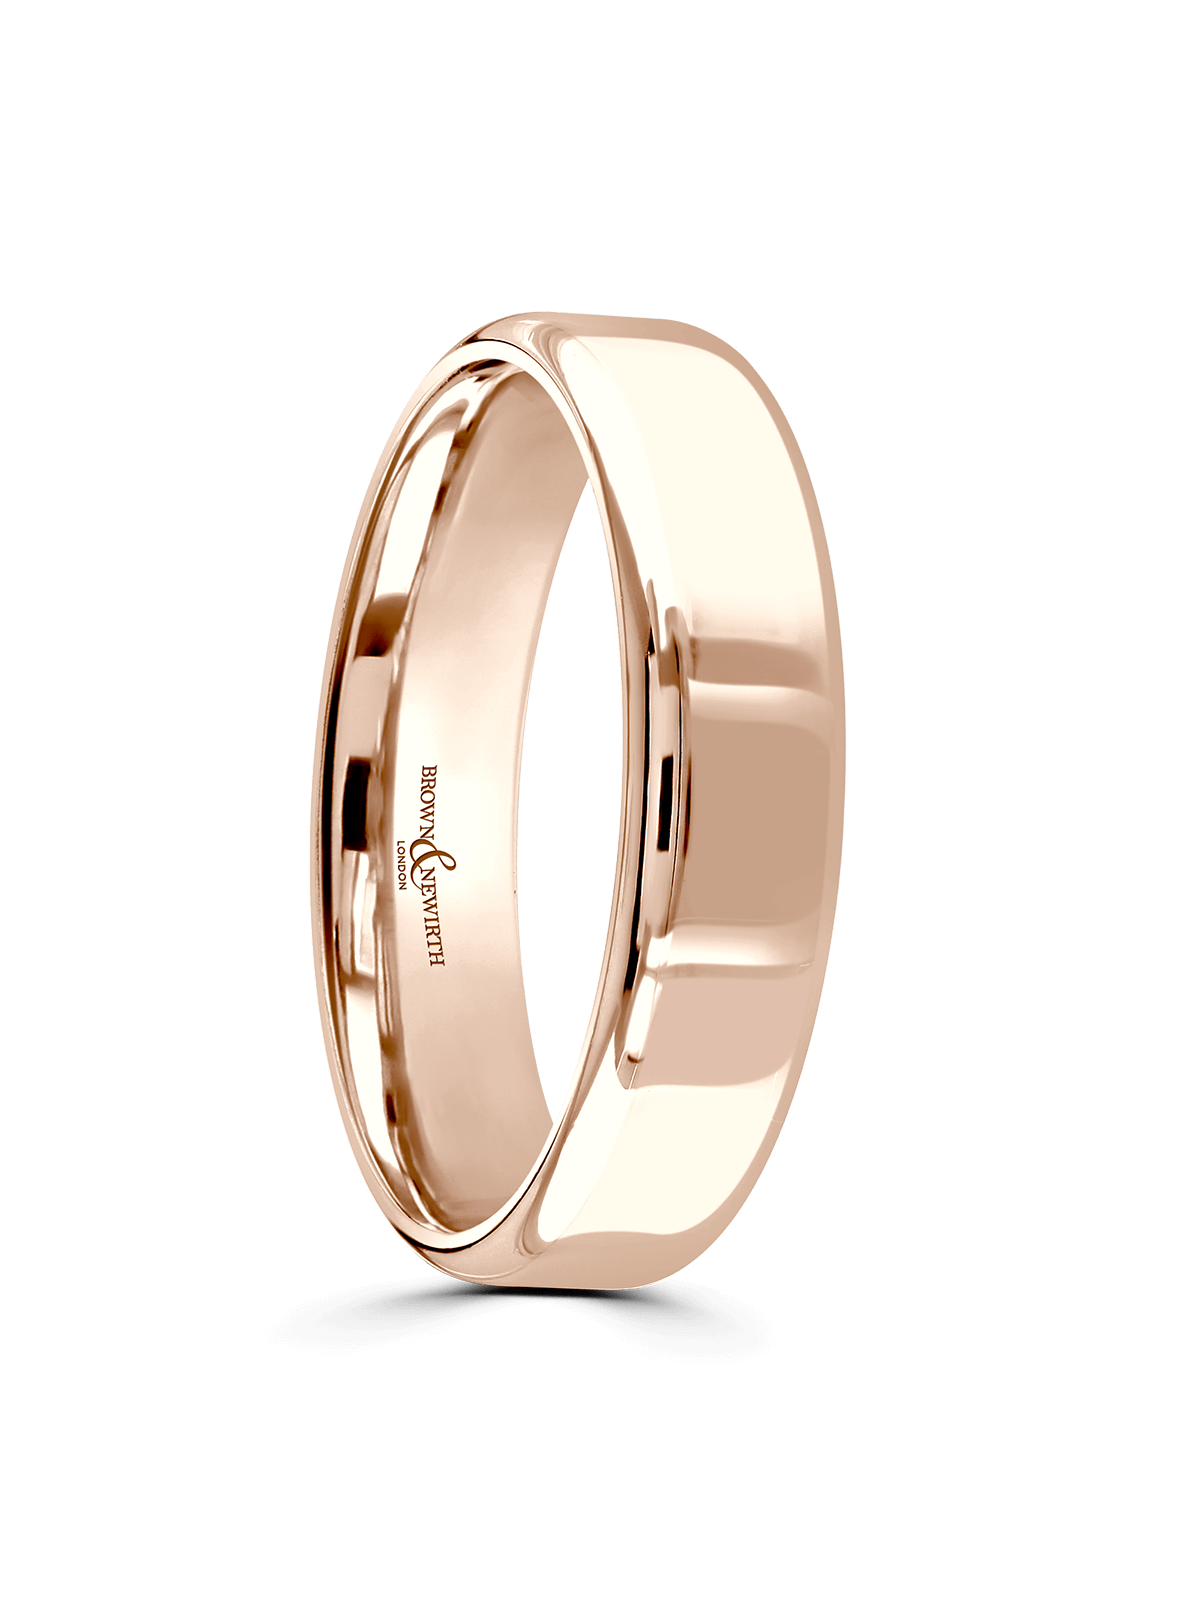 Brown & Newirth Honest 5mm Wedding Ring in 9ct Rose Gold